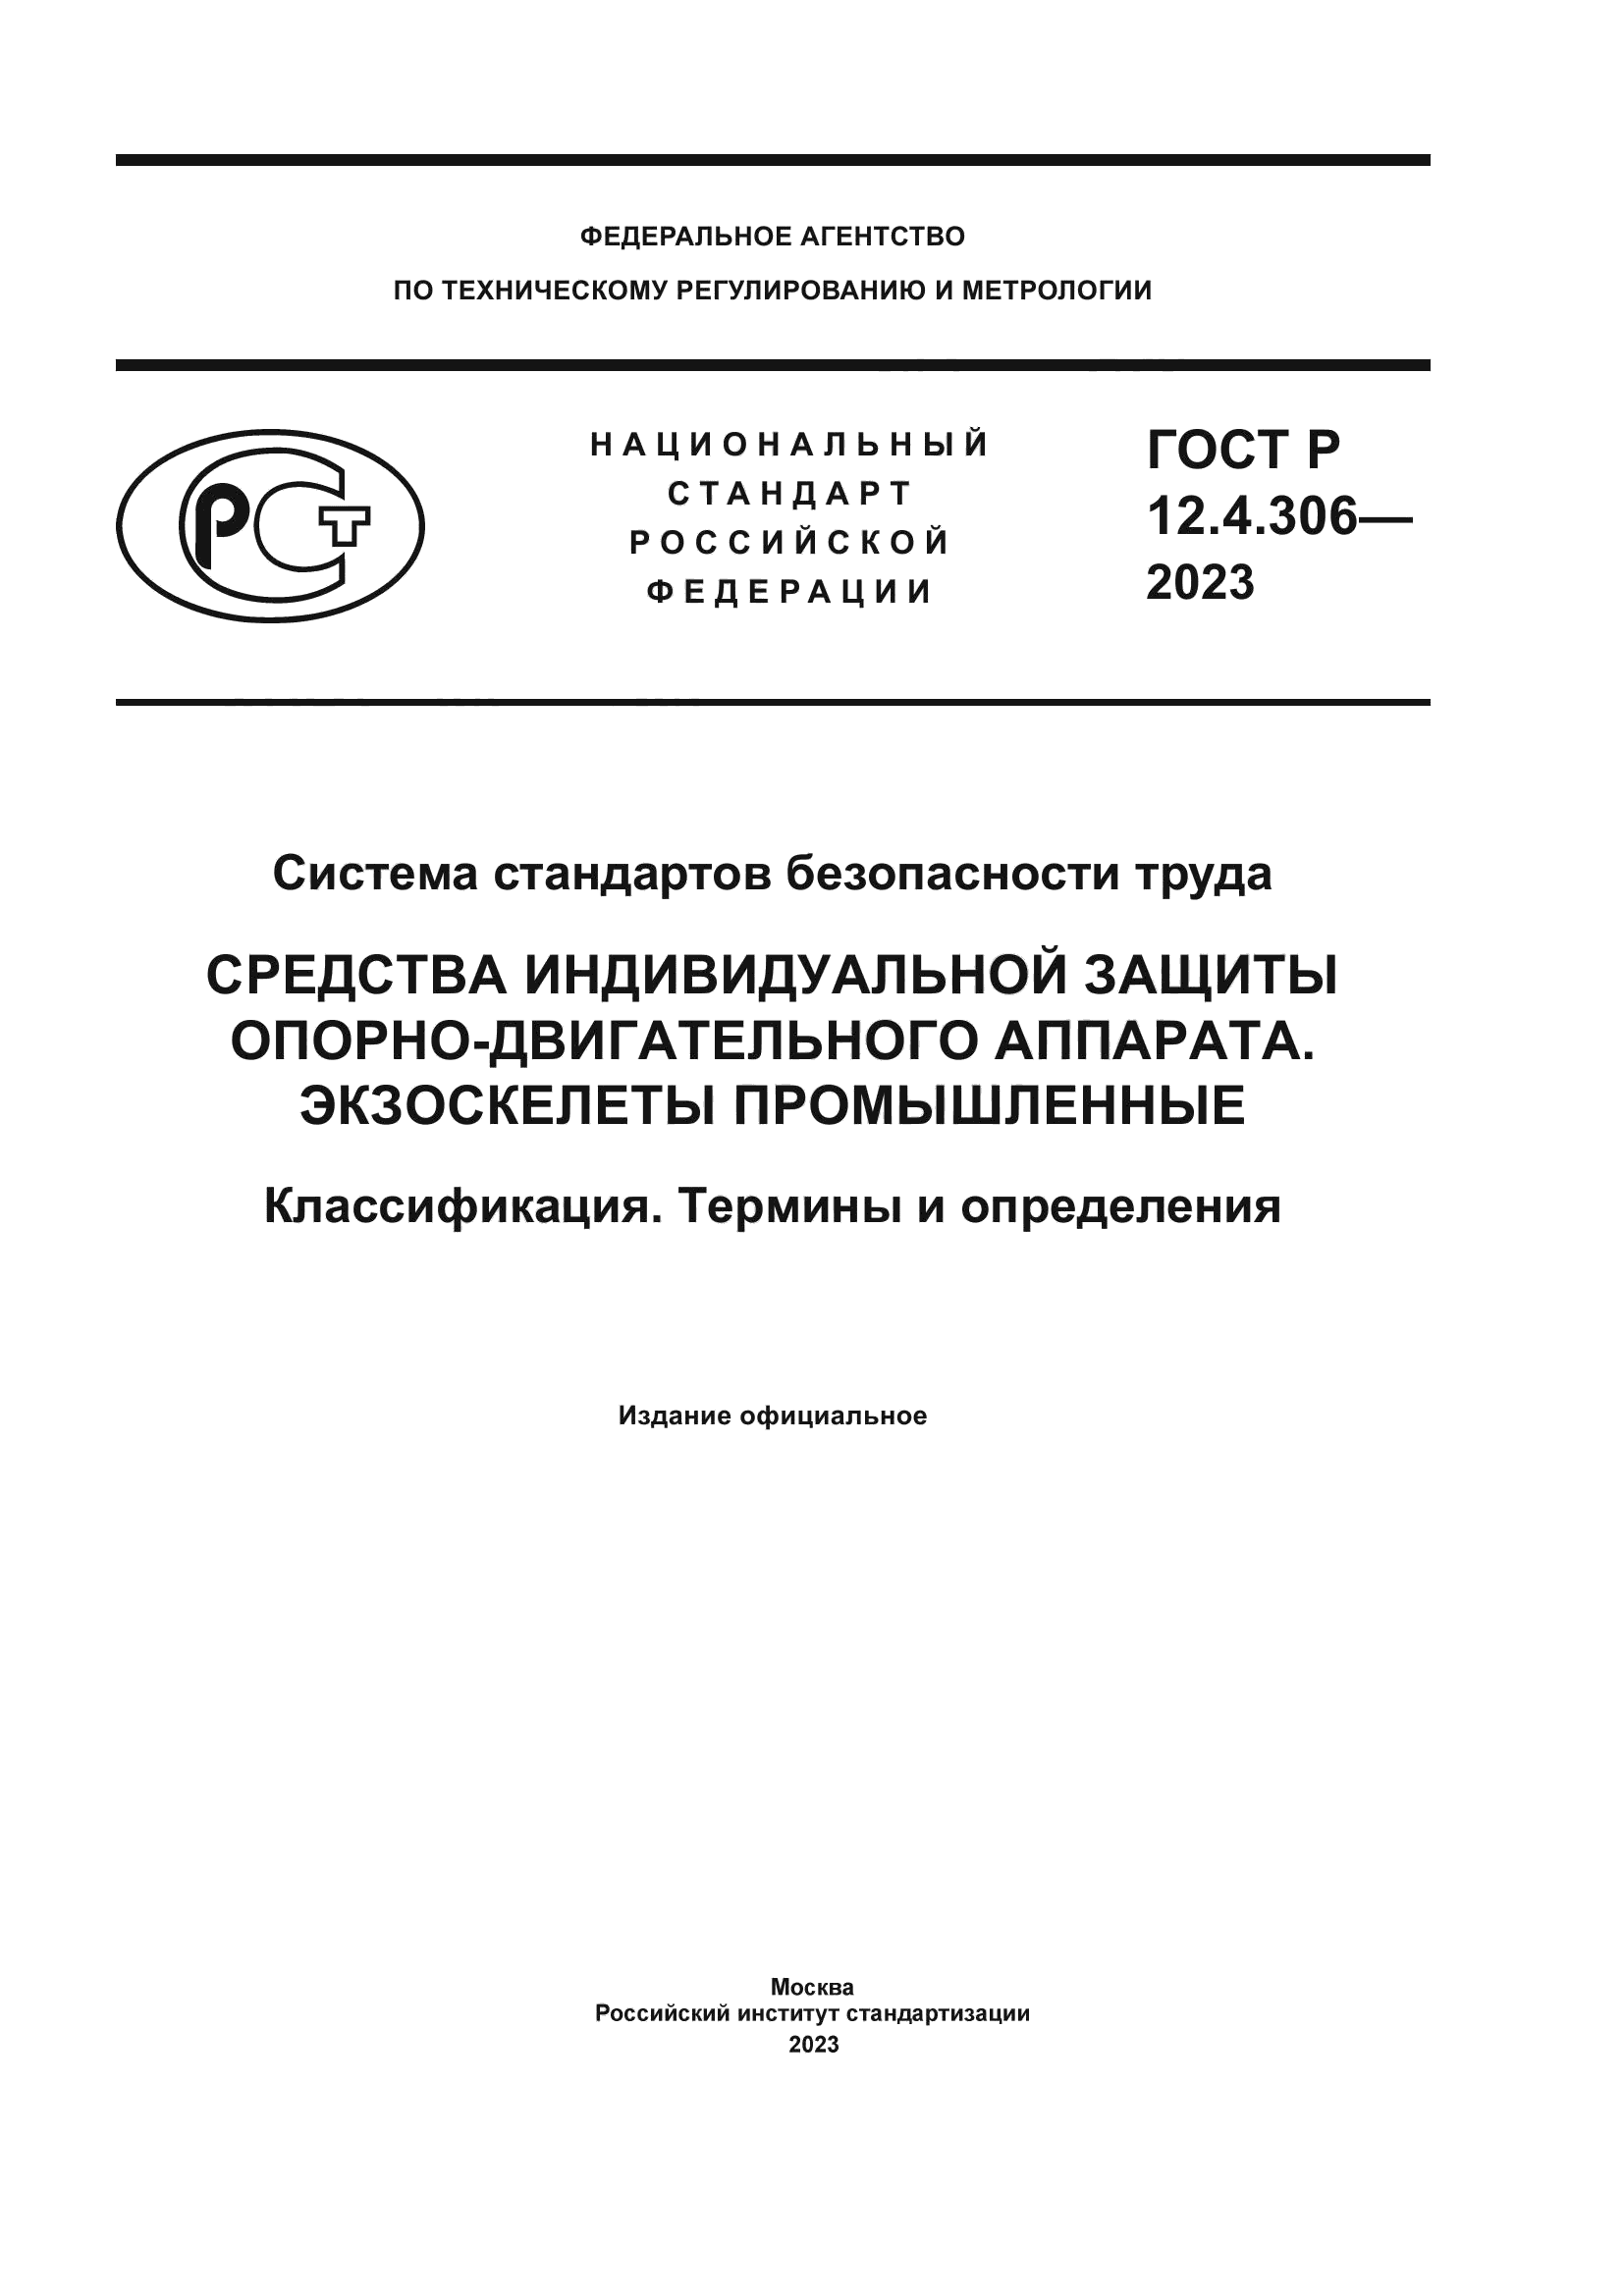 ГОСТ Р 12.4.306-2023